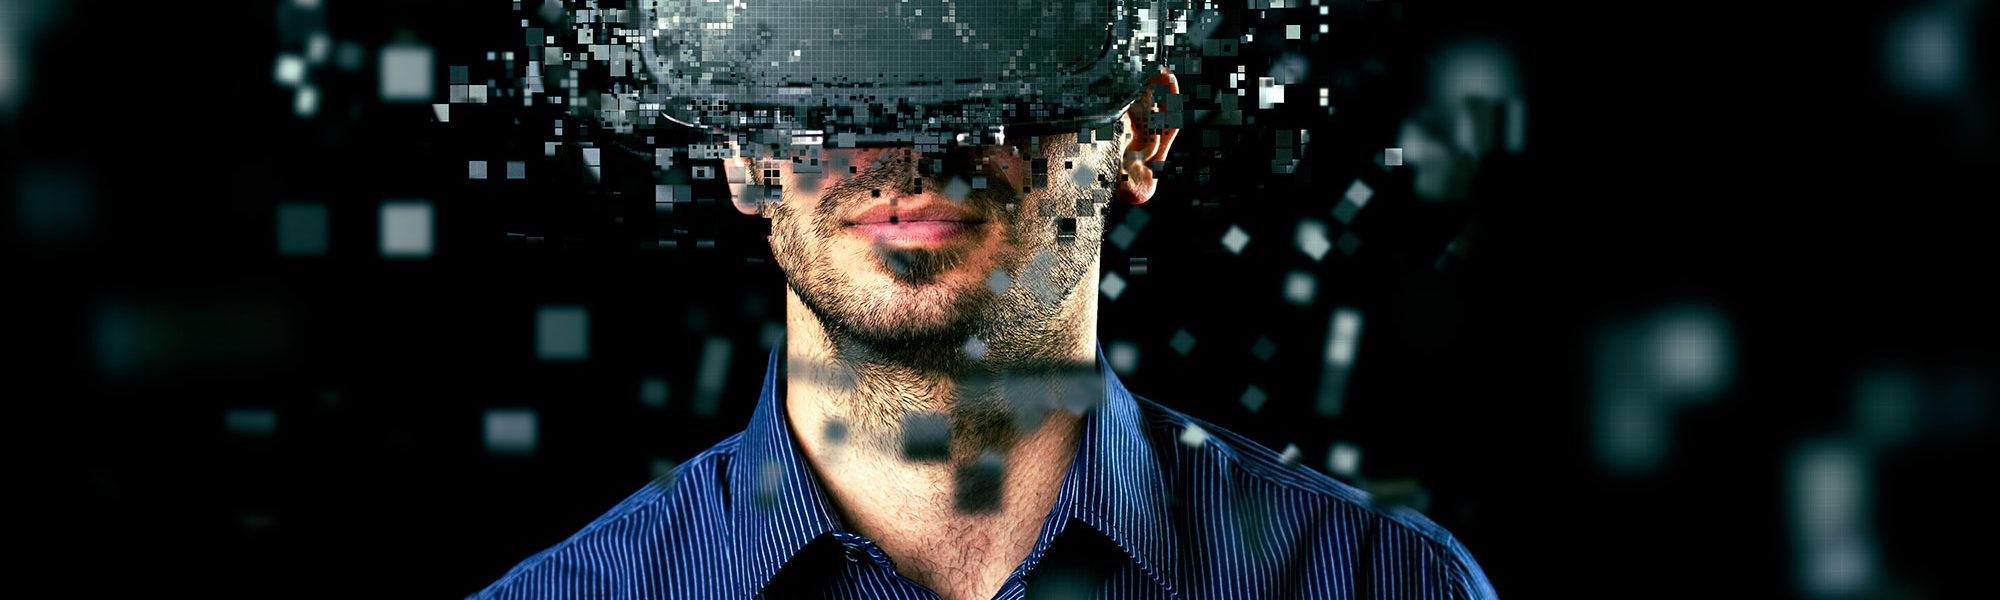 Technology man virtual reality